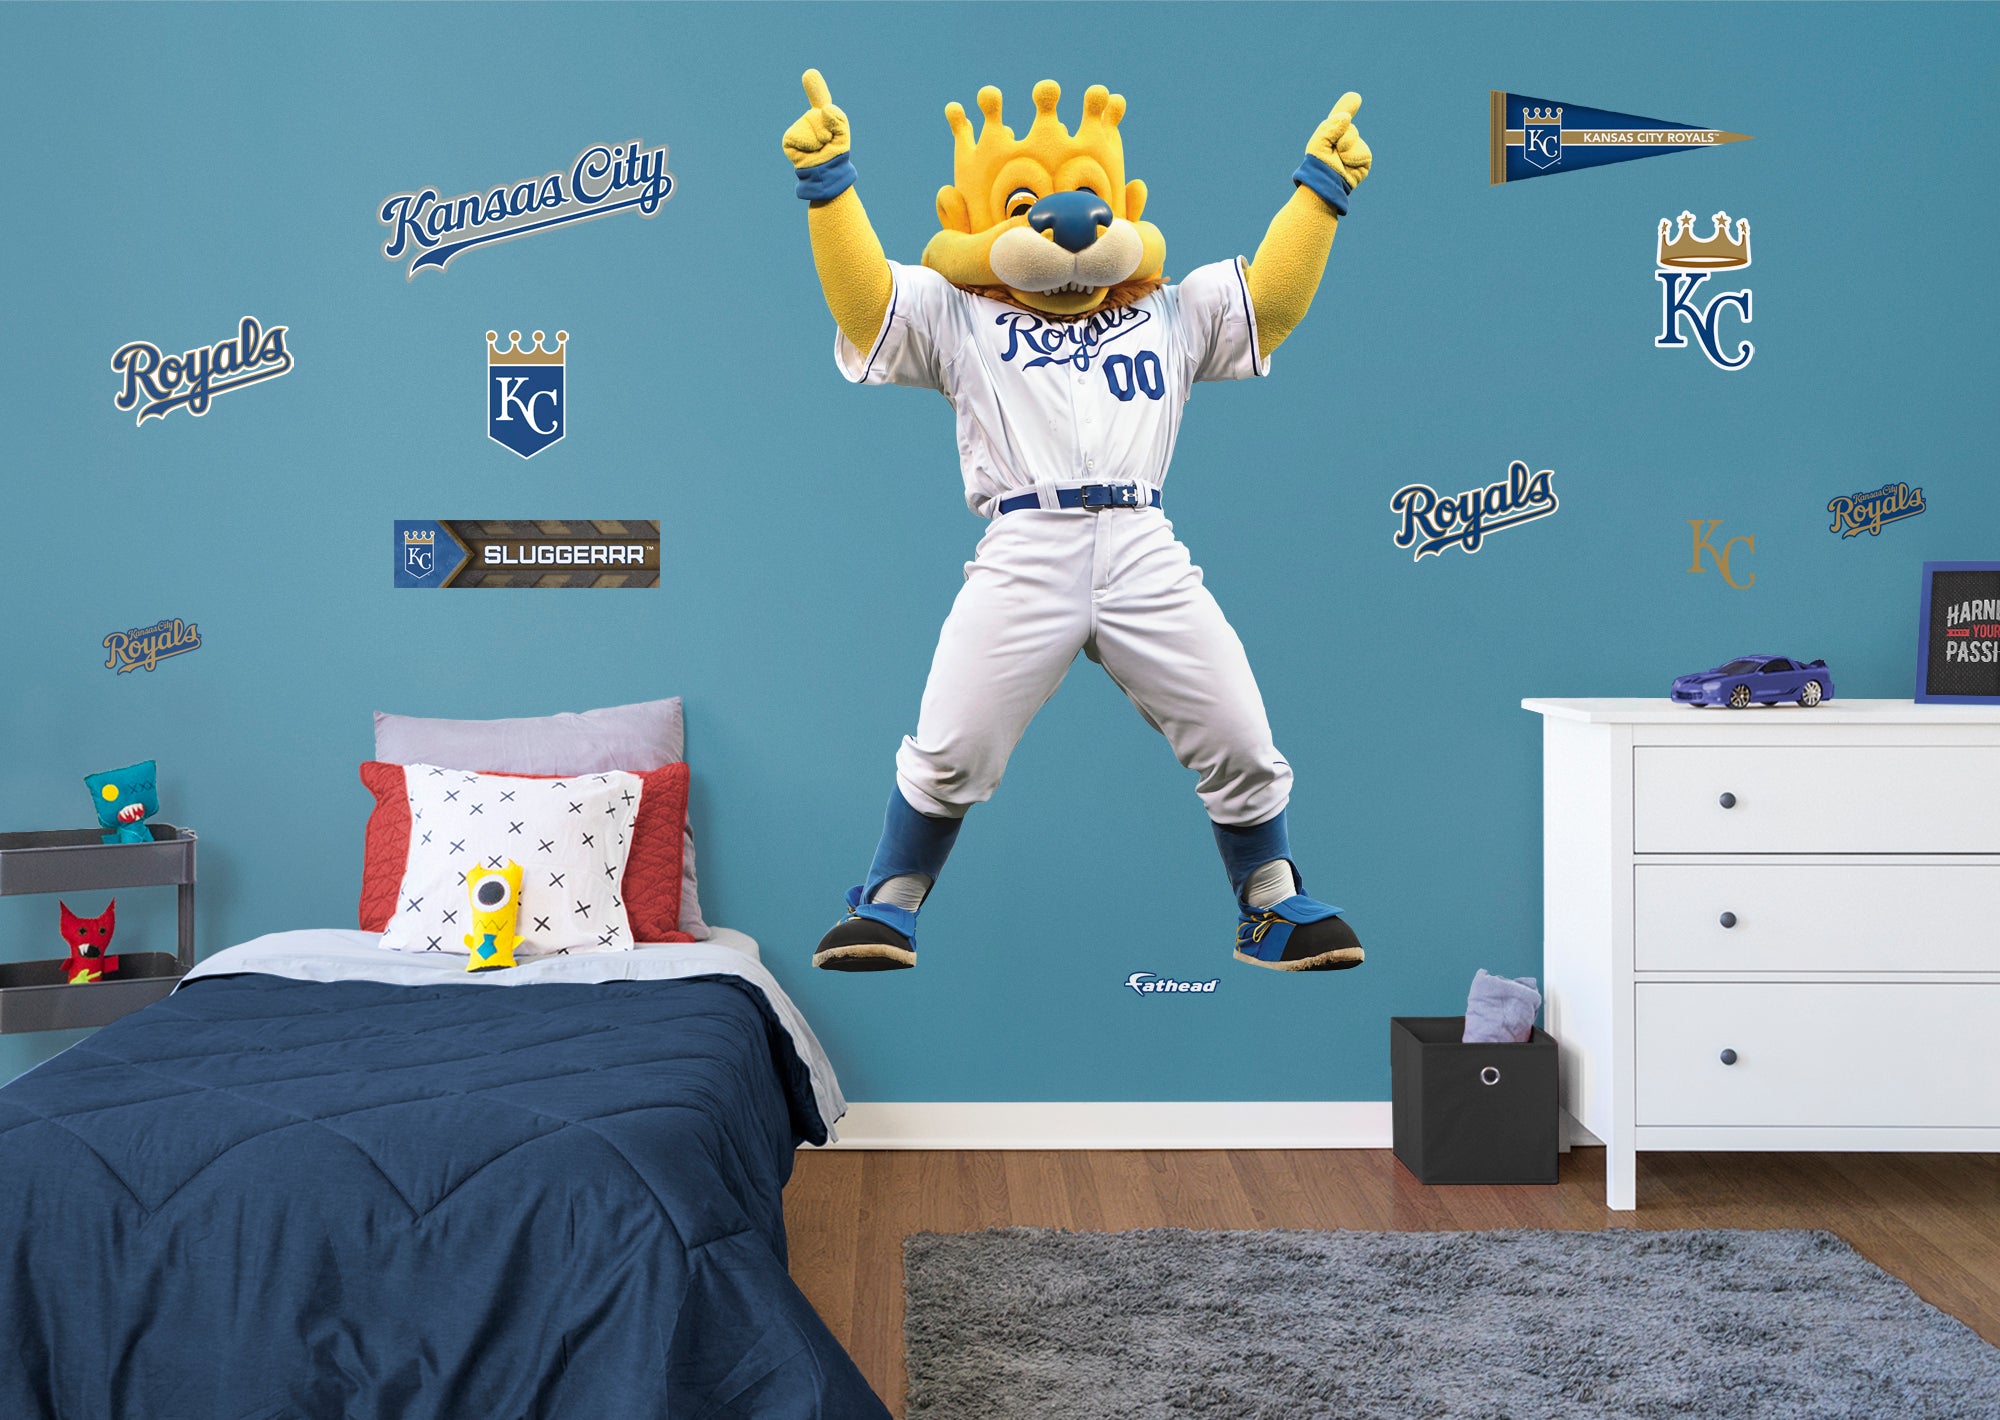 Kansas City Royals: Sluggerrr 2021 Mascot - Officially Licensed MLB  Removable Wall Adhesive Decal